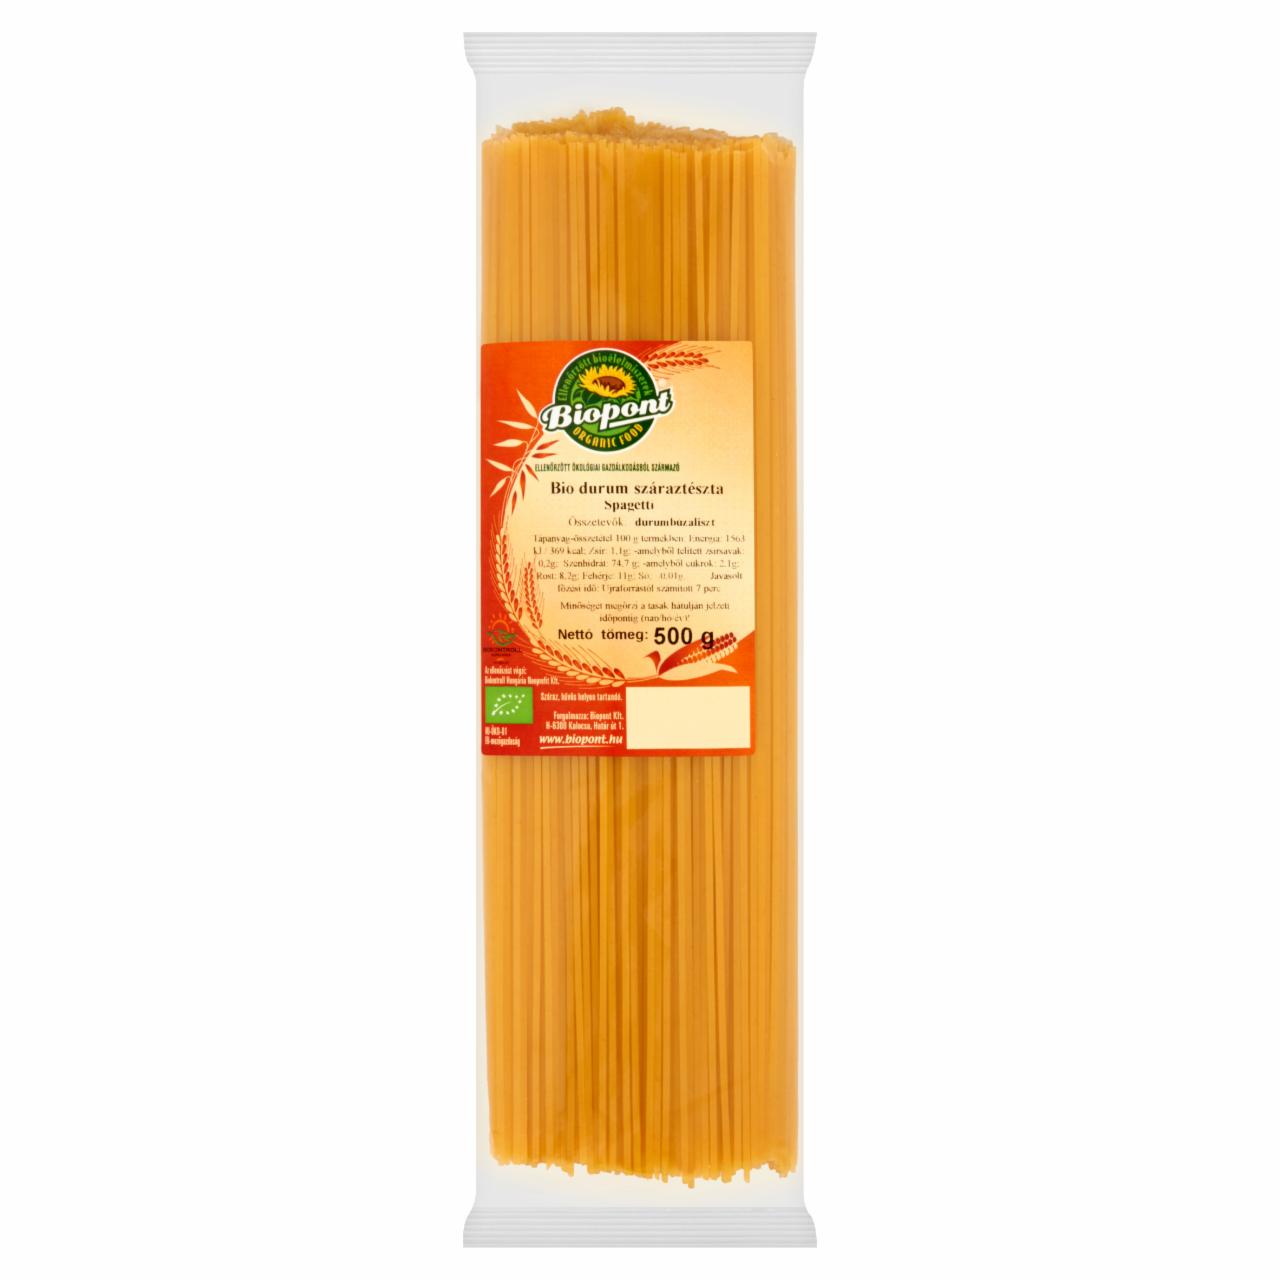 Képek - Biopont BIO spagetti durum száraztészta 500 g